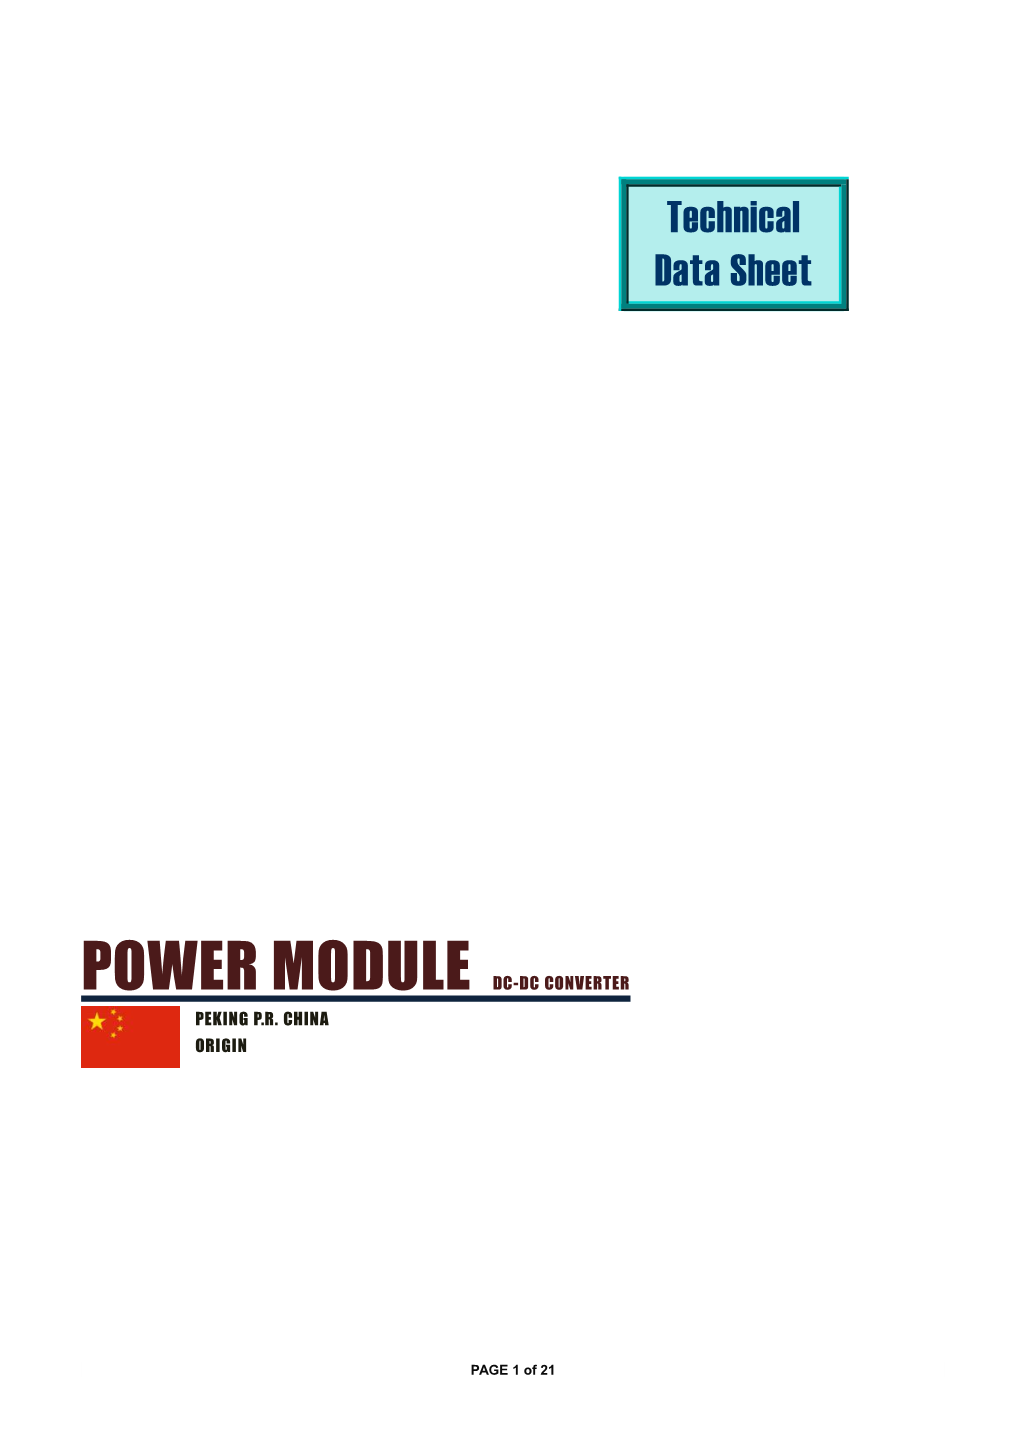 Power Module Dc-Dc Converter Peking P.R